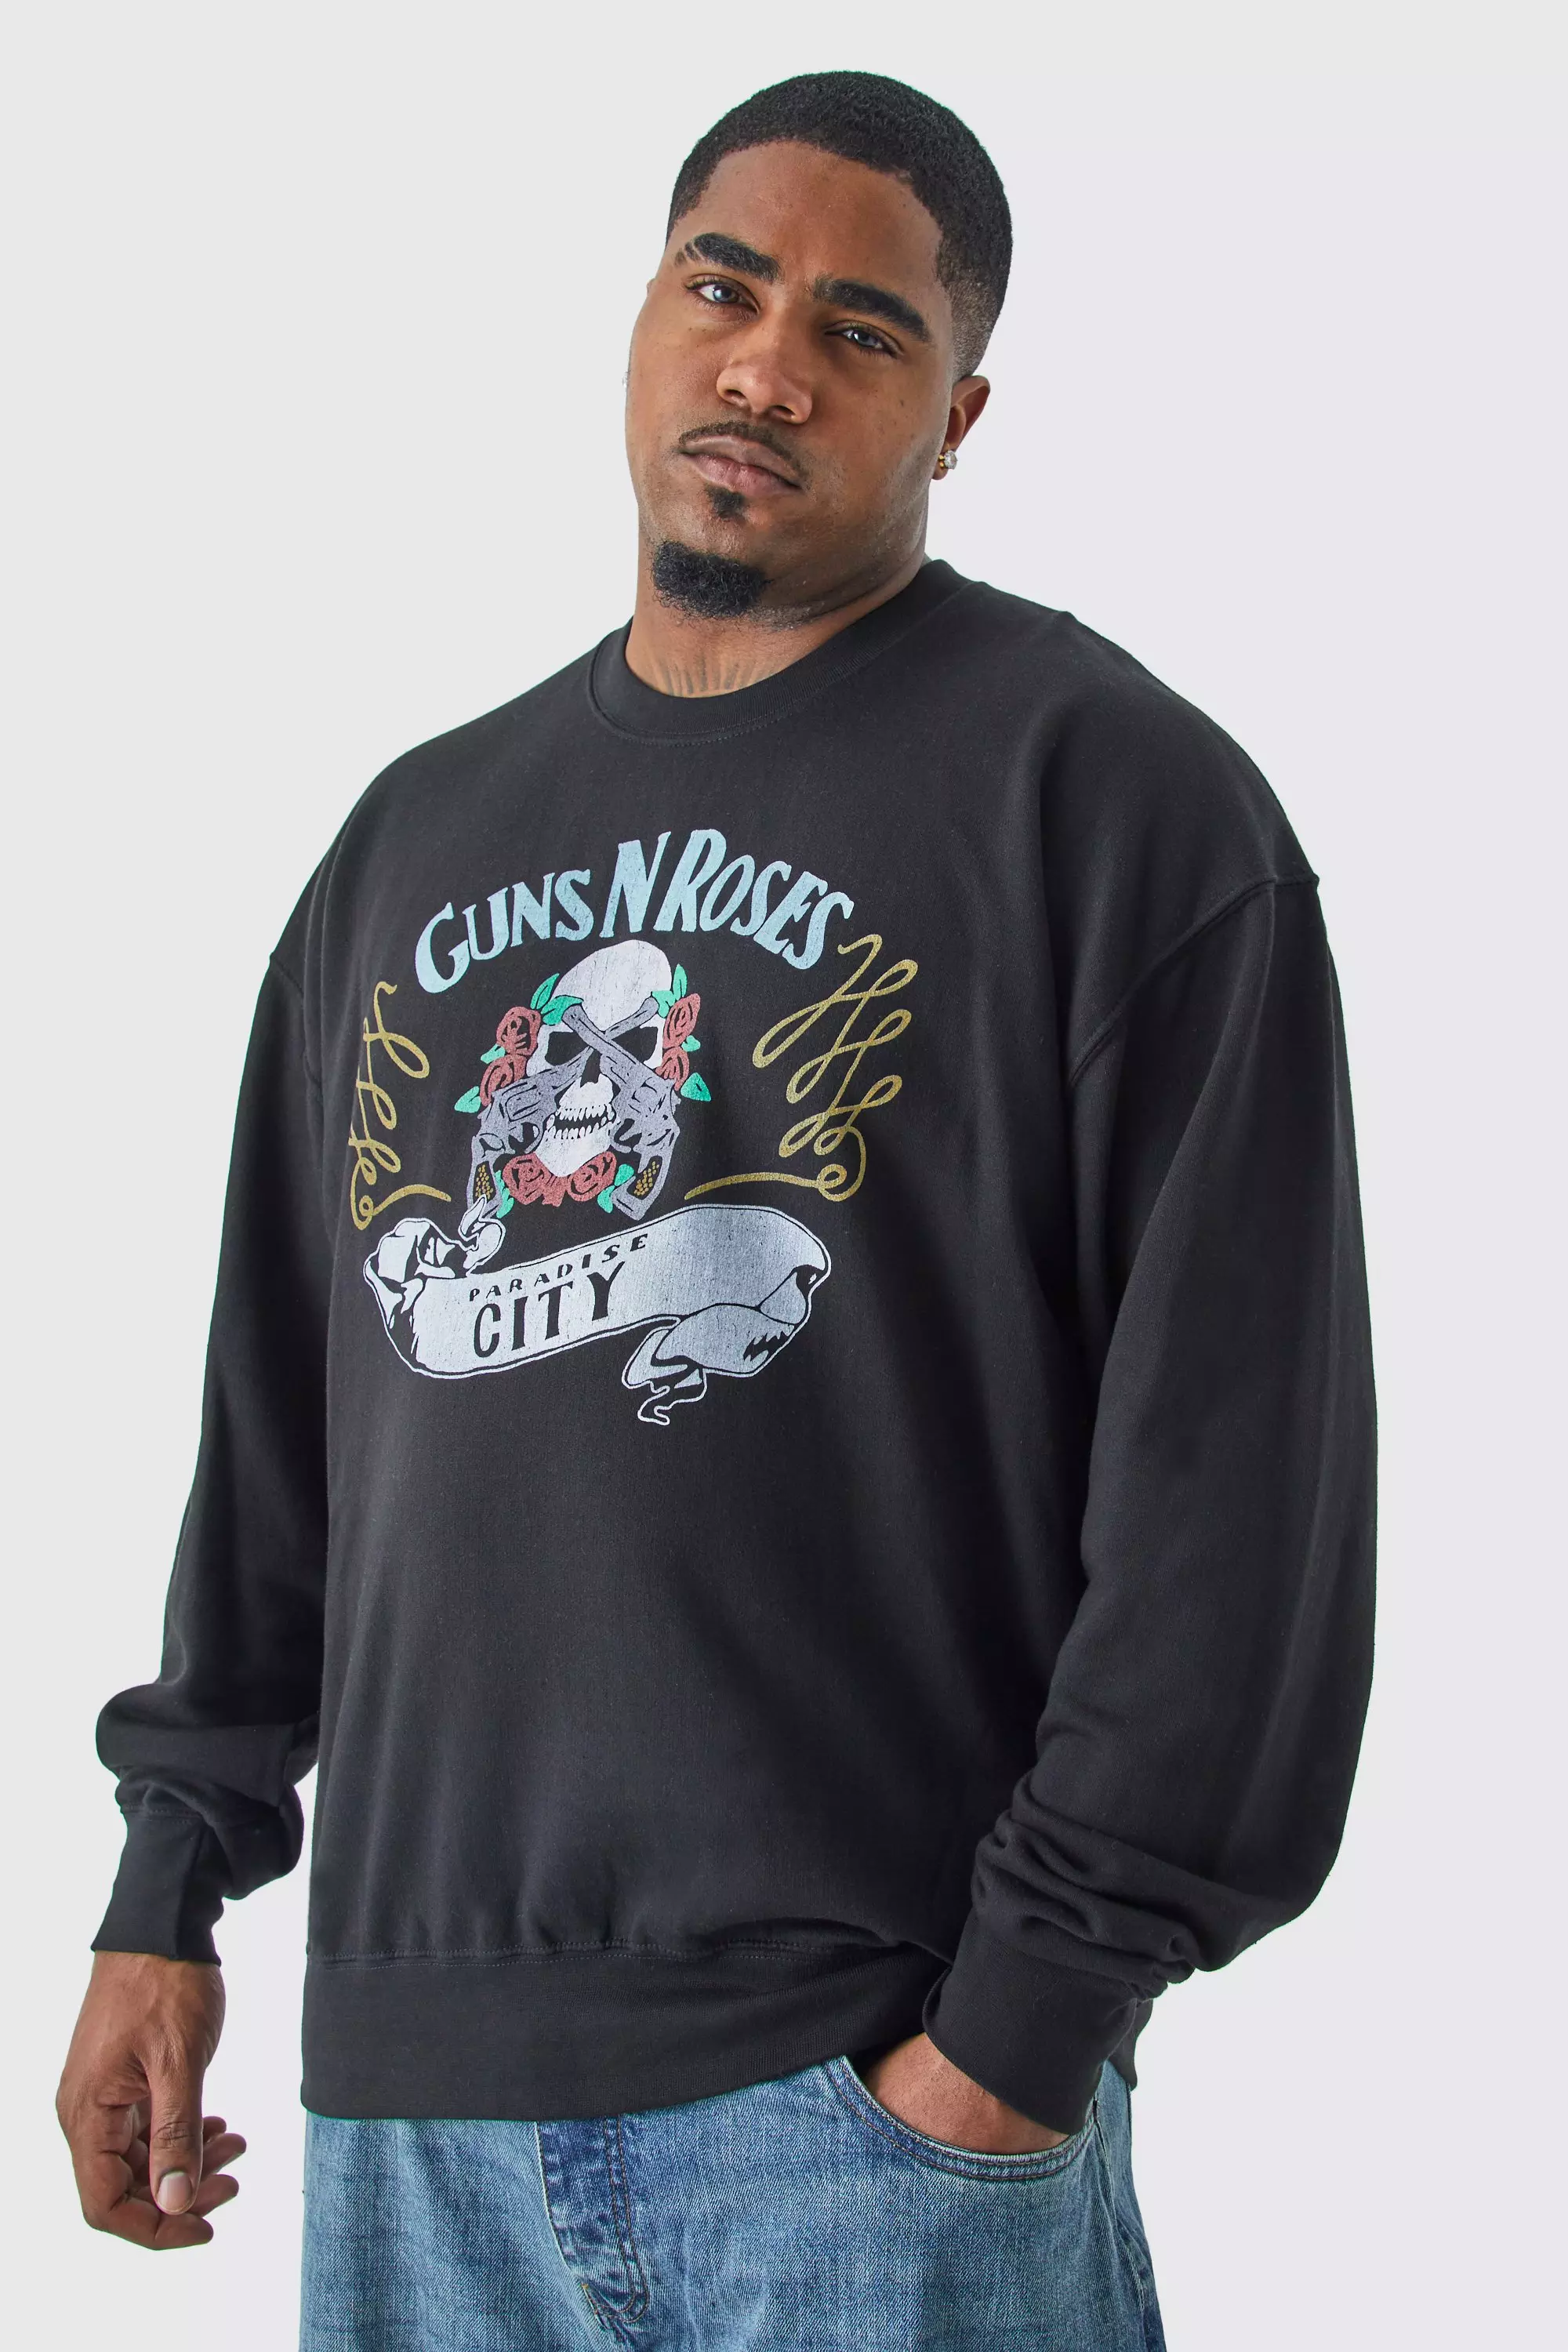 Plus Guns N Roses Skull City License Sweatshirt Black